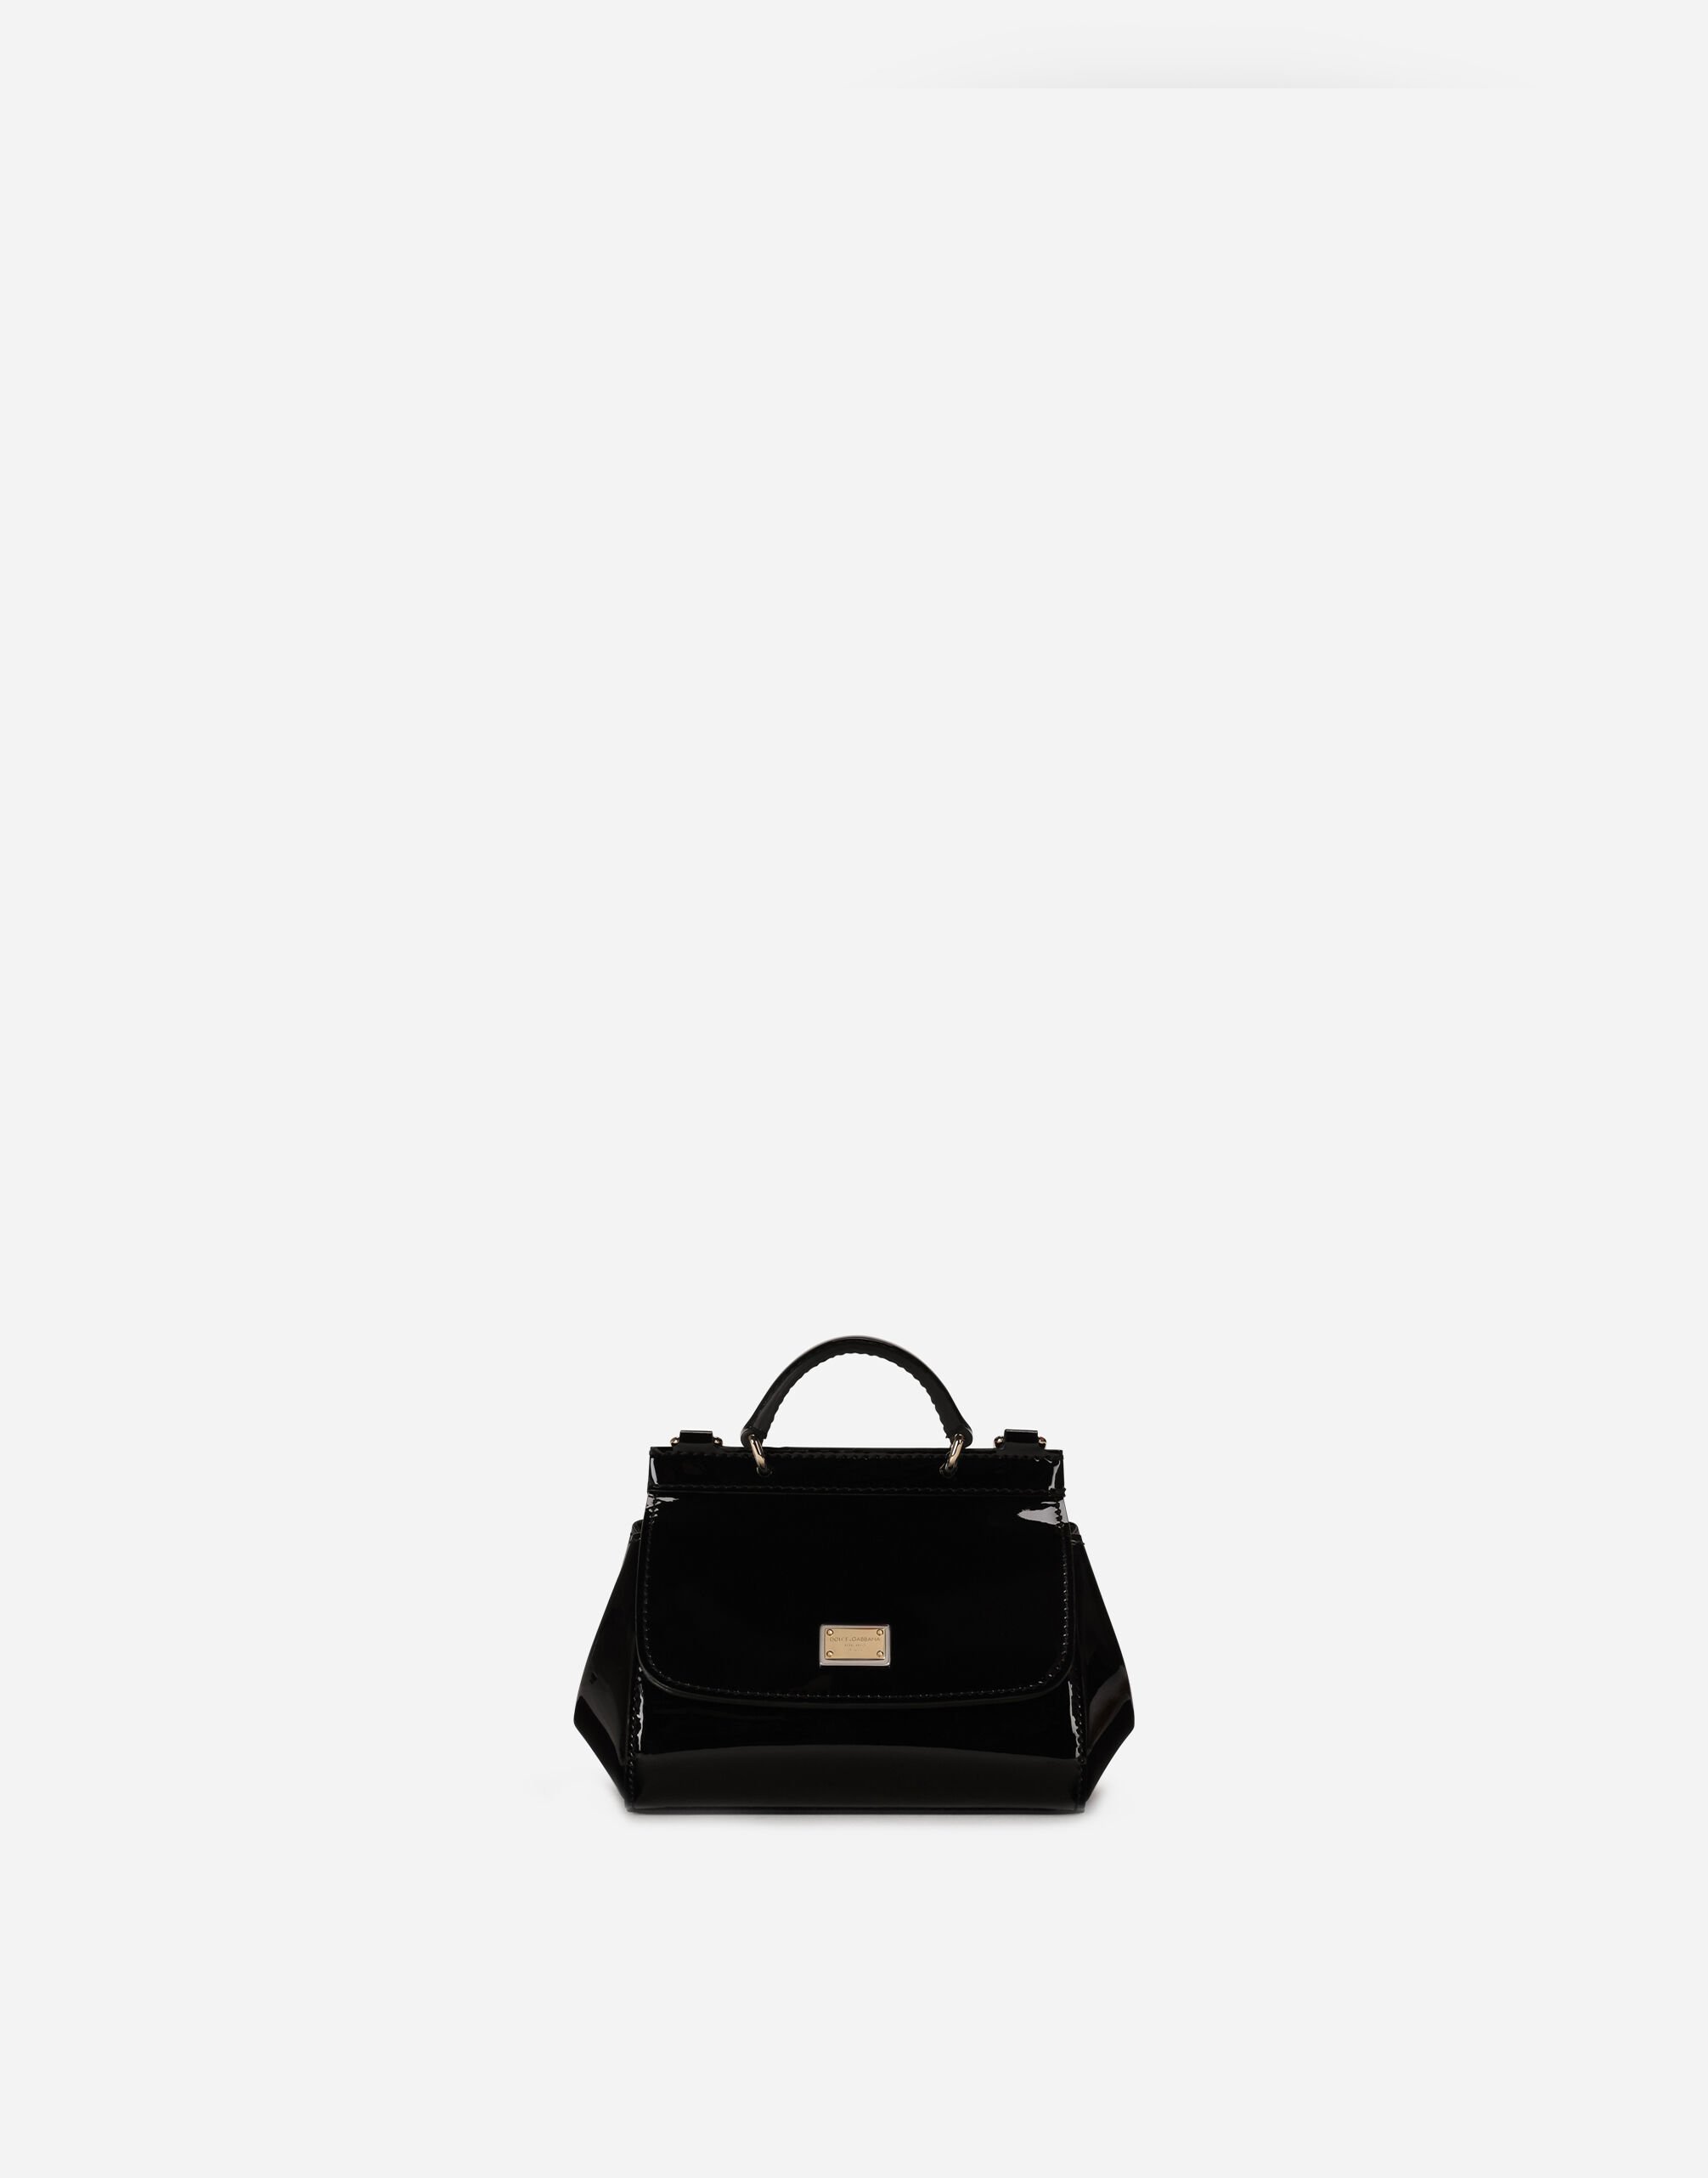 Dolce & Gabbana Patent leather mini Sicily bag Black EB0003A1067